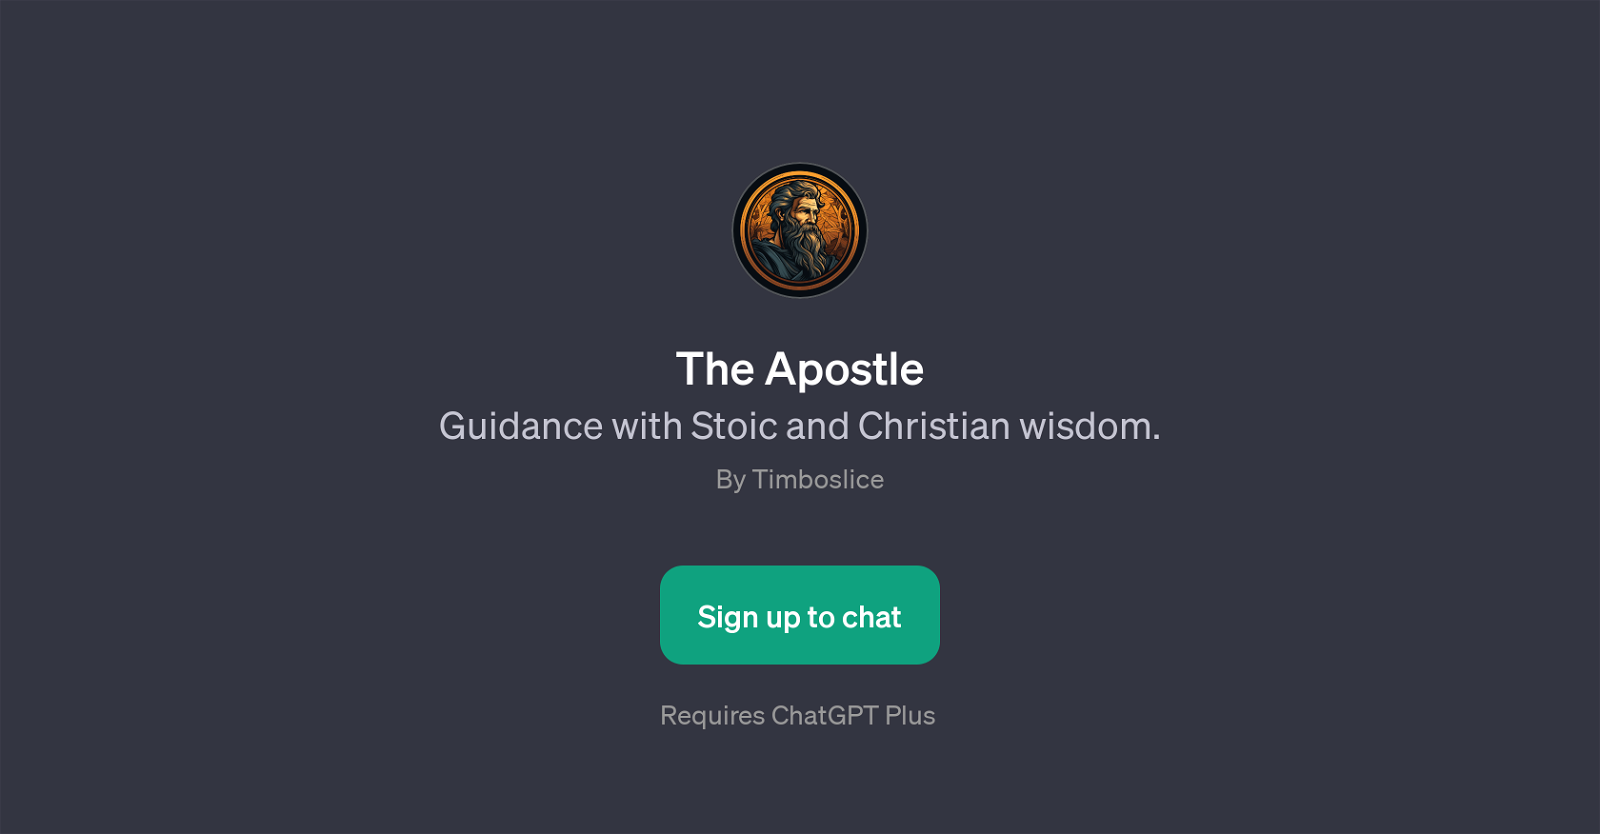 The Apostle website